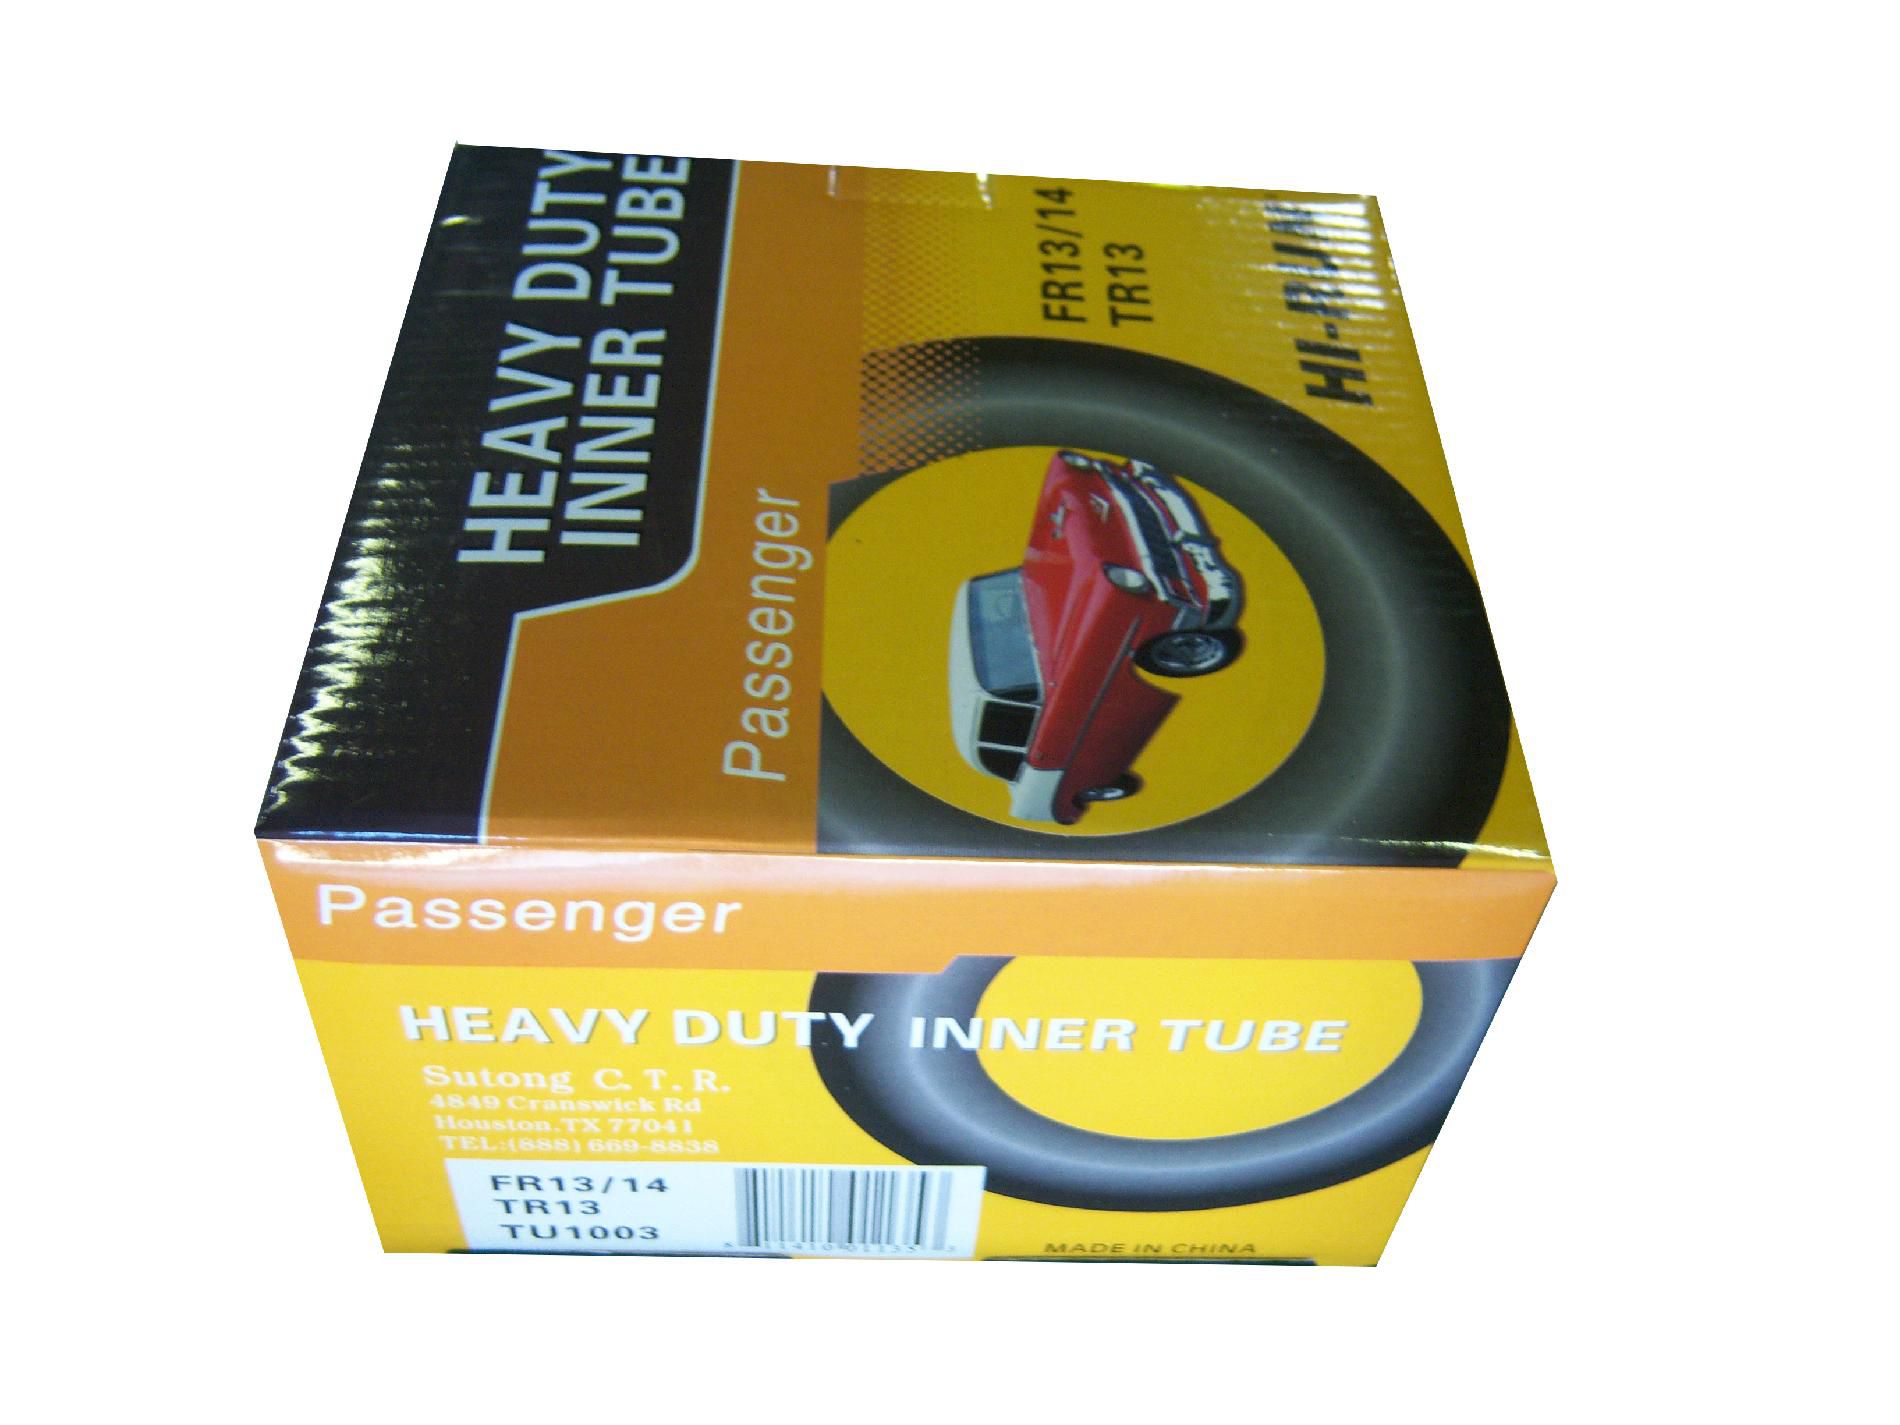 HI-RUN TUN1003 Passenger Tire Tube Fr13/14